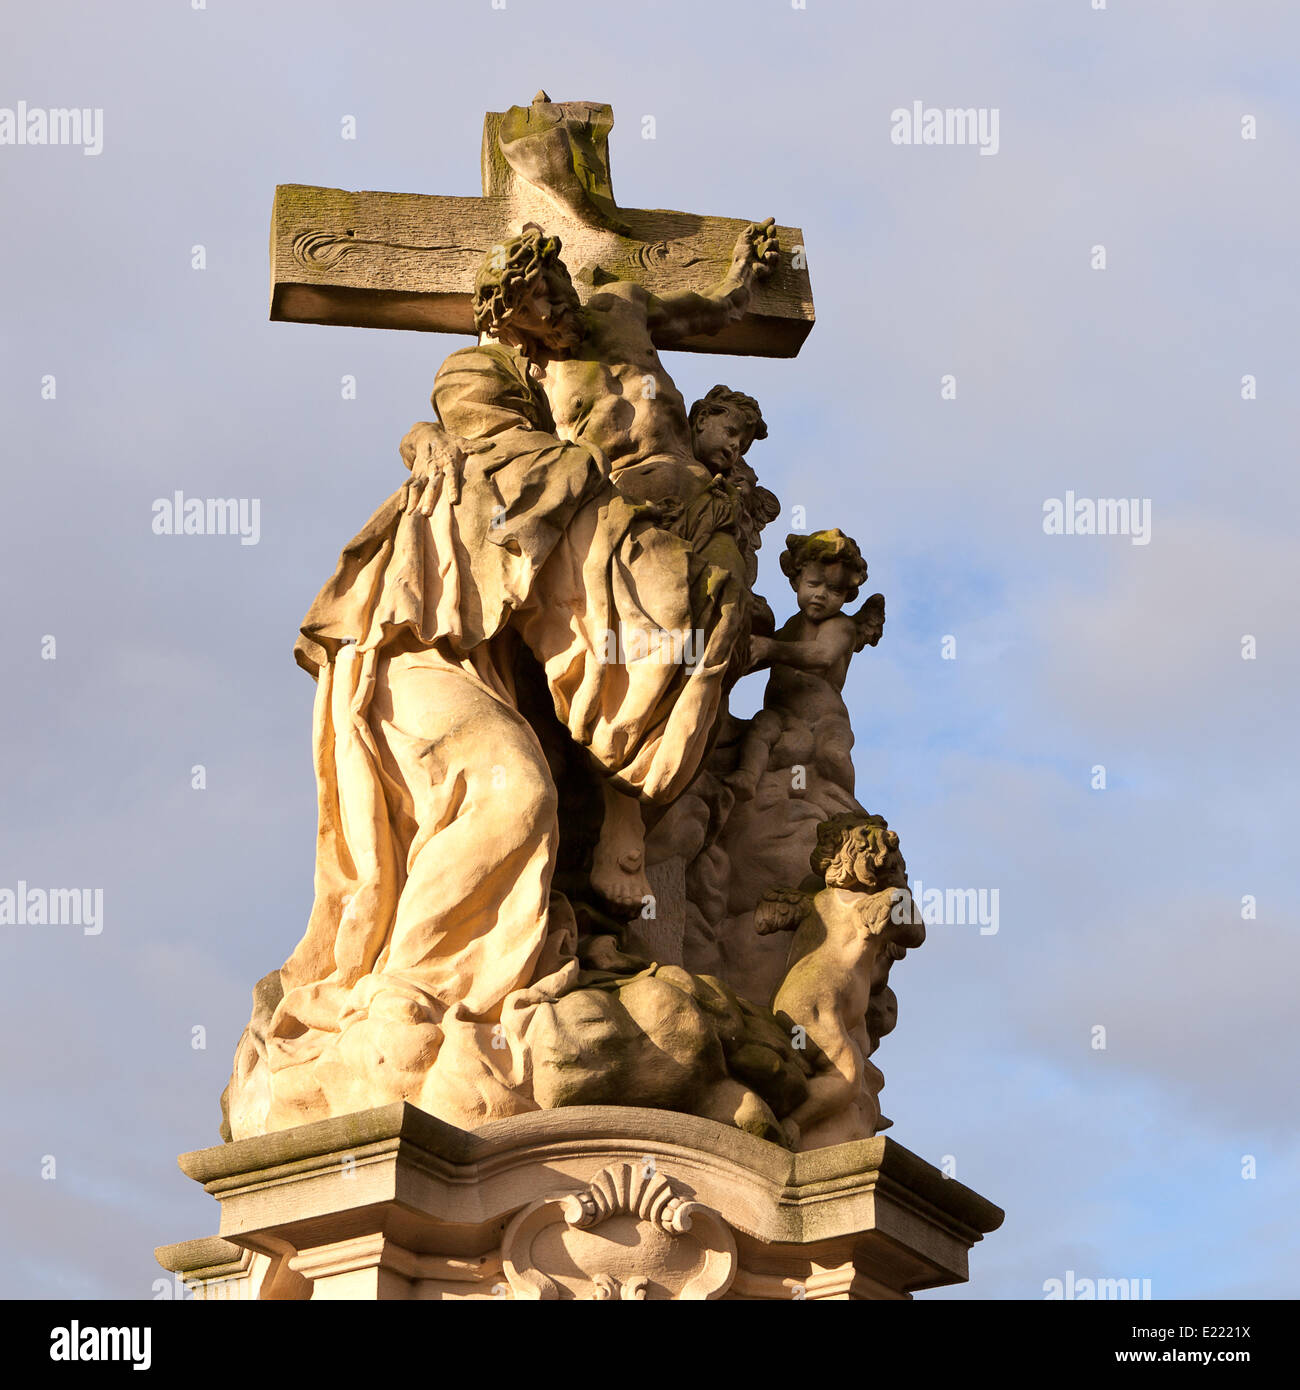 Statue of jesus christ crucified Stock Photo